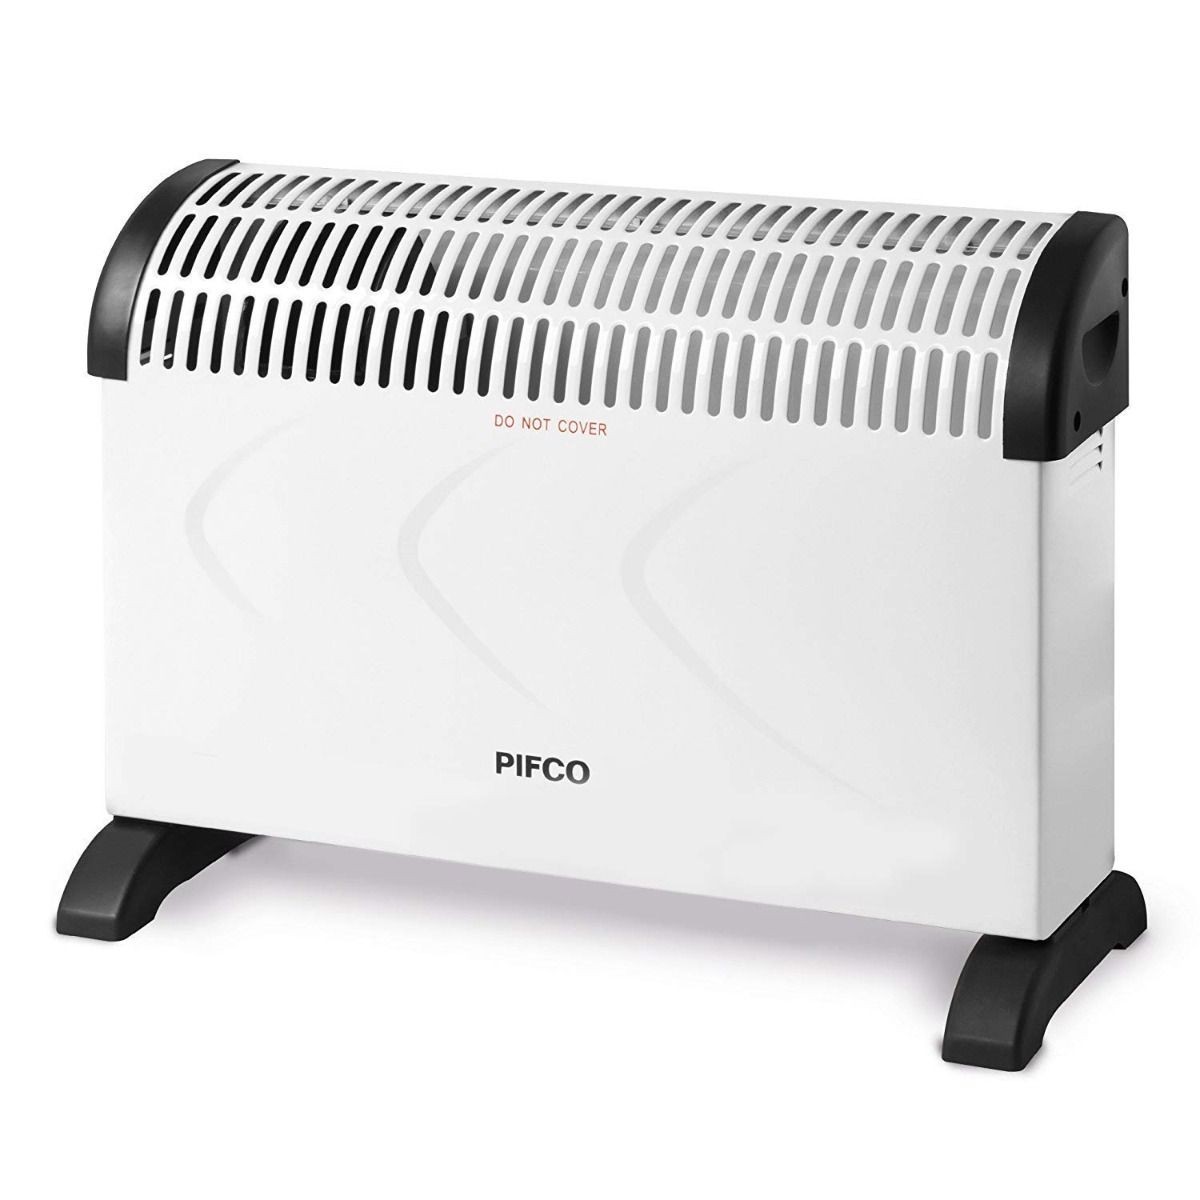 PIFCO Convector Heater 2000W (No Fan)